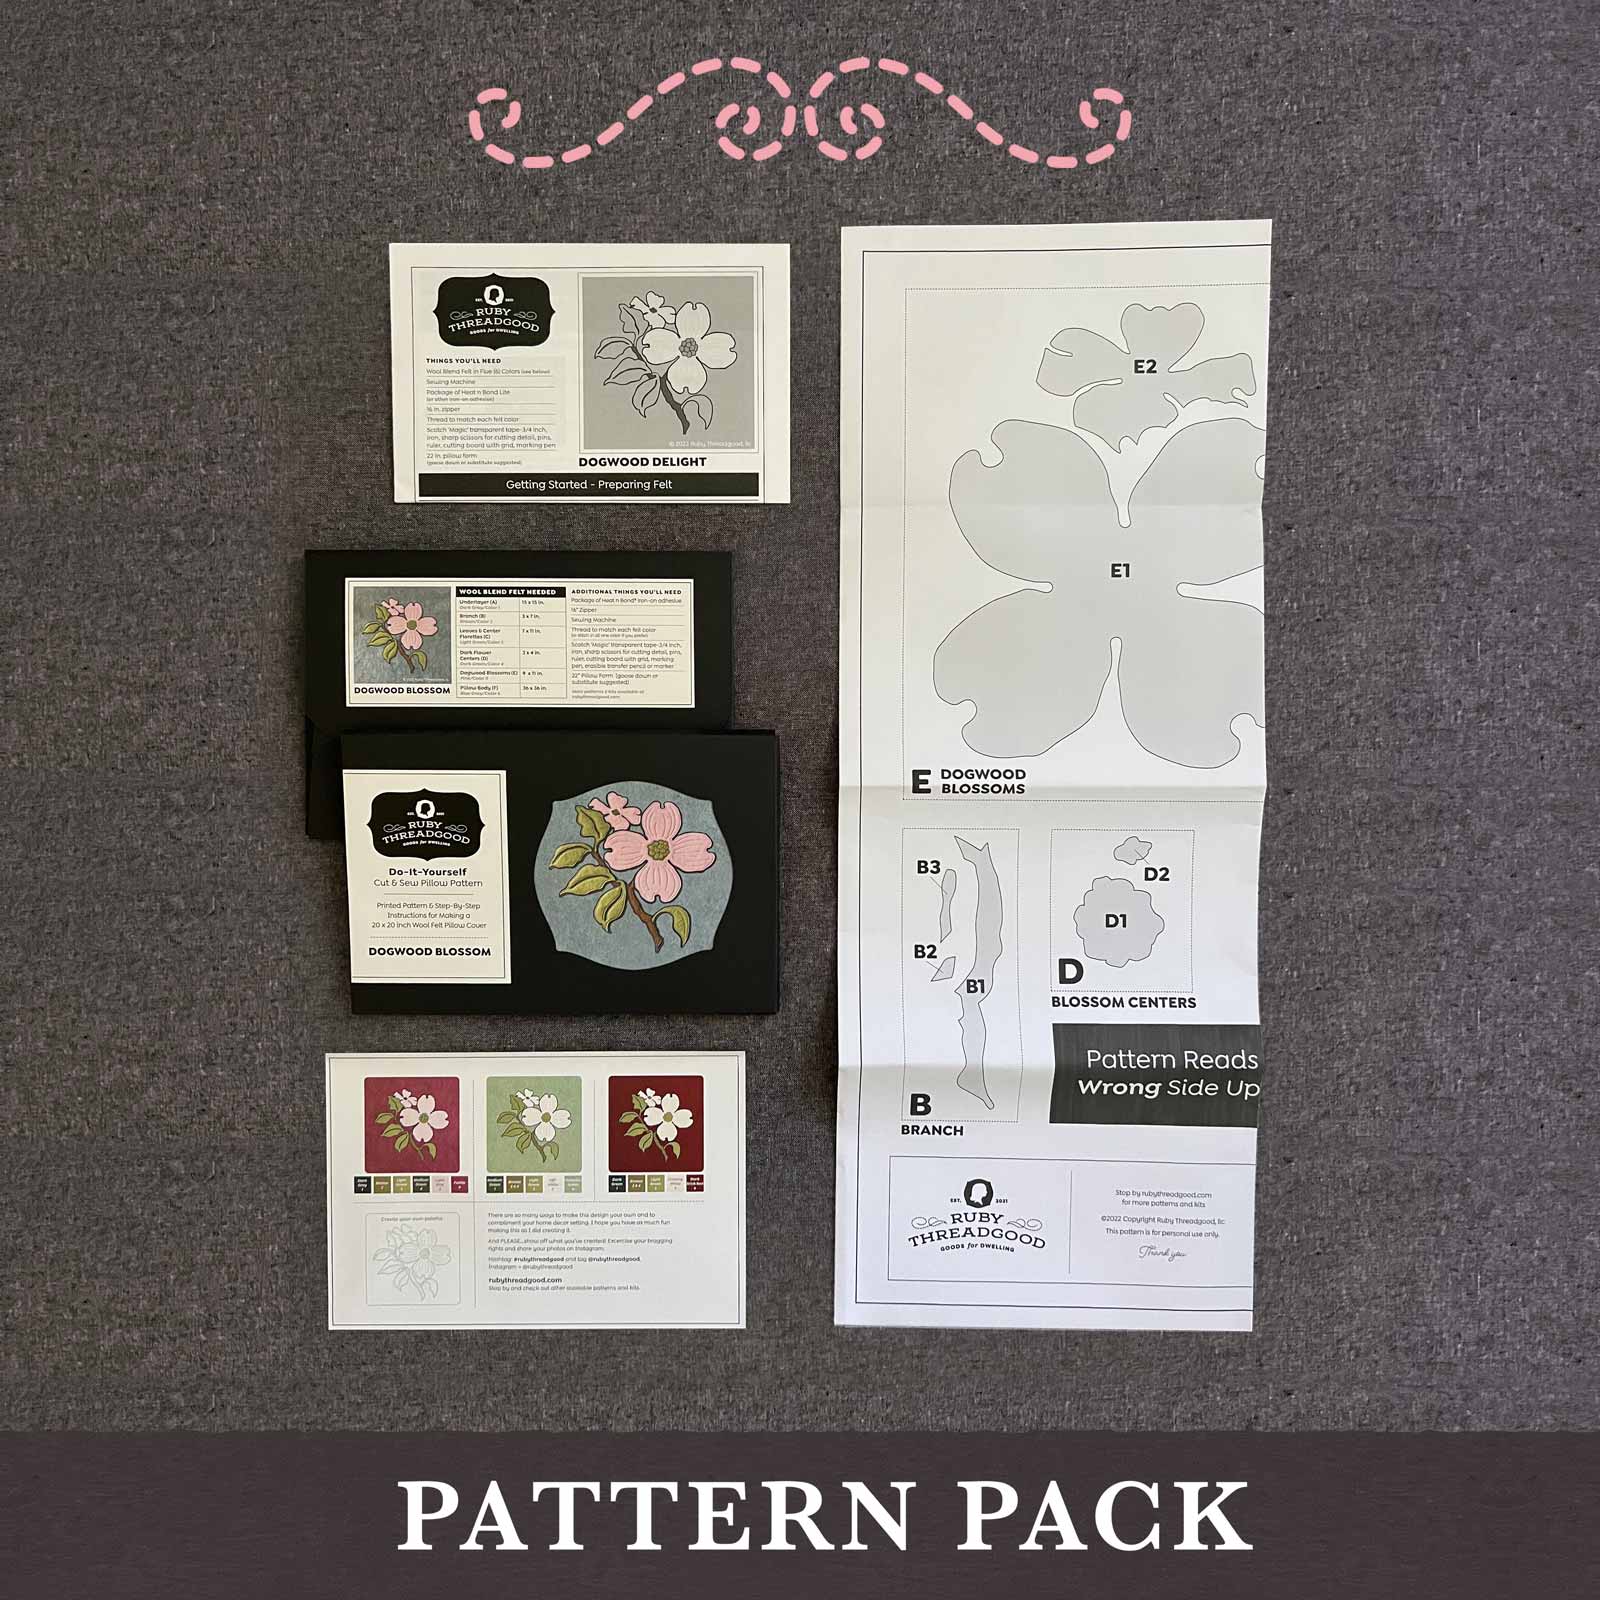 Dogwood Blossom Pattern Pack